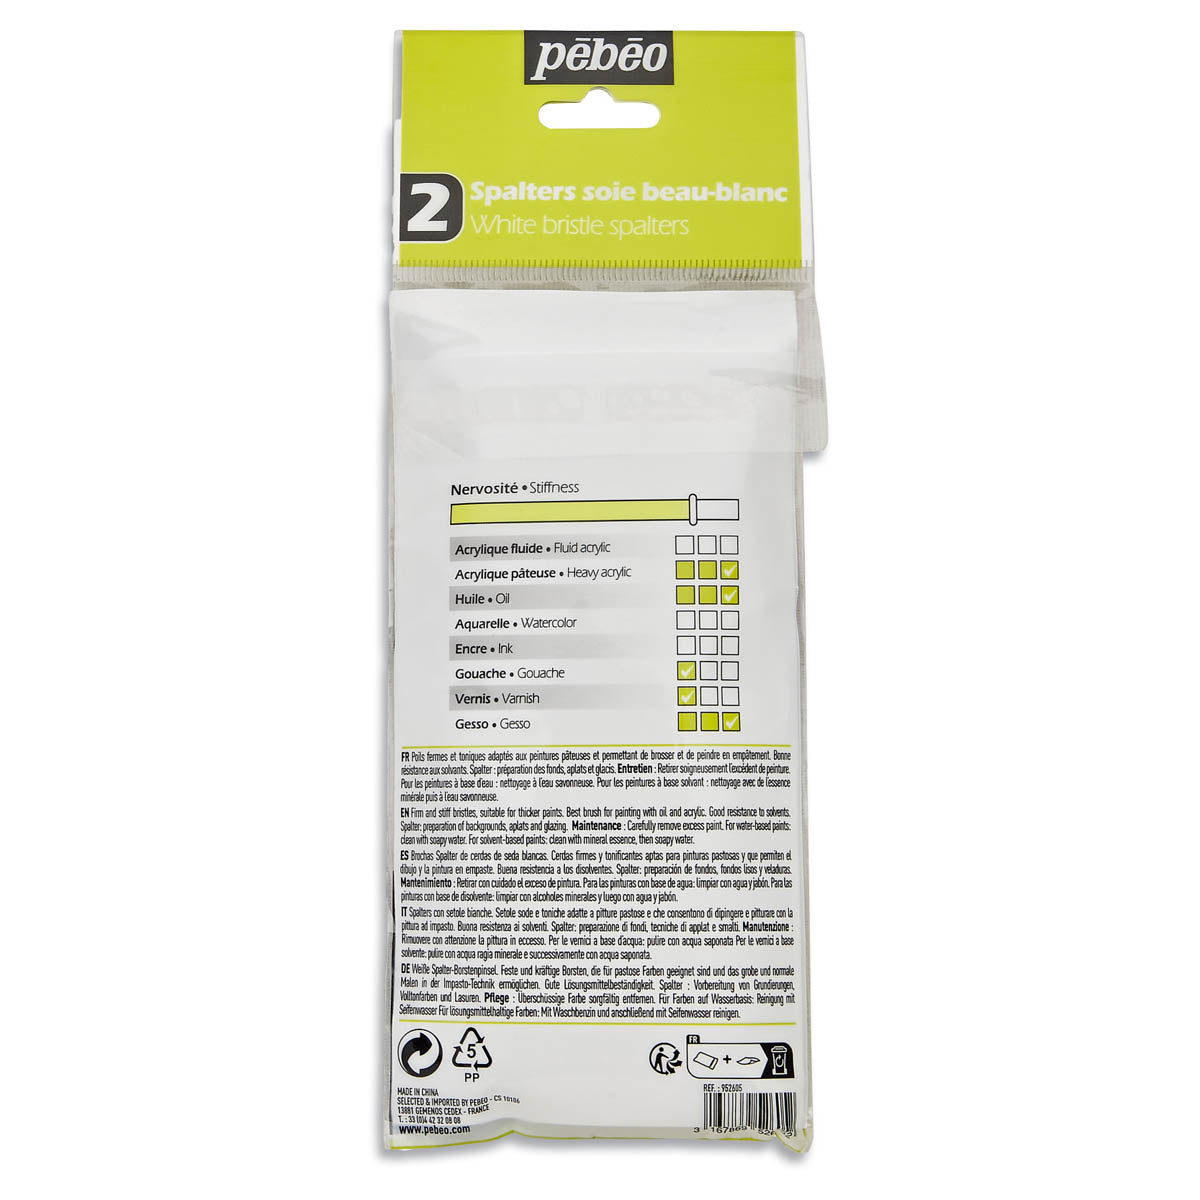 Pebeo - Acrylic & Oil Brush set - 2x  Spalter Extra Short Pure White Bristle